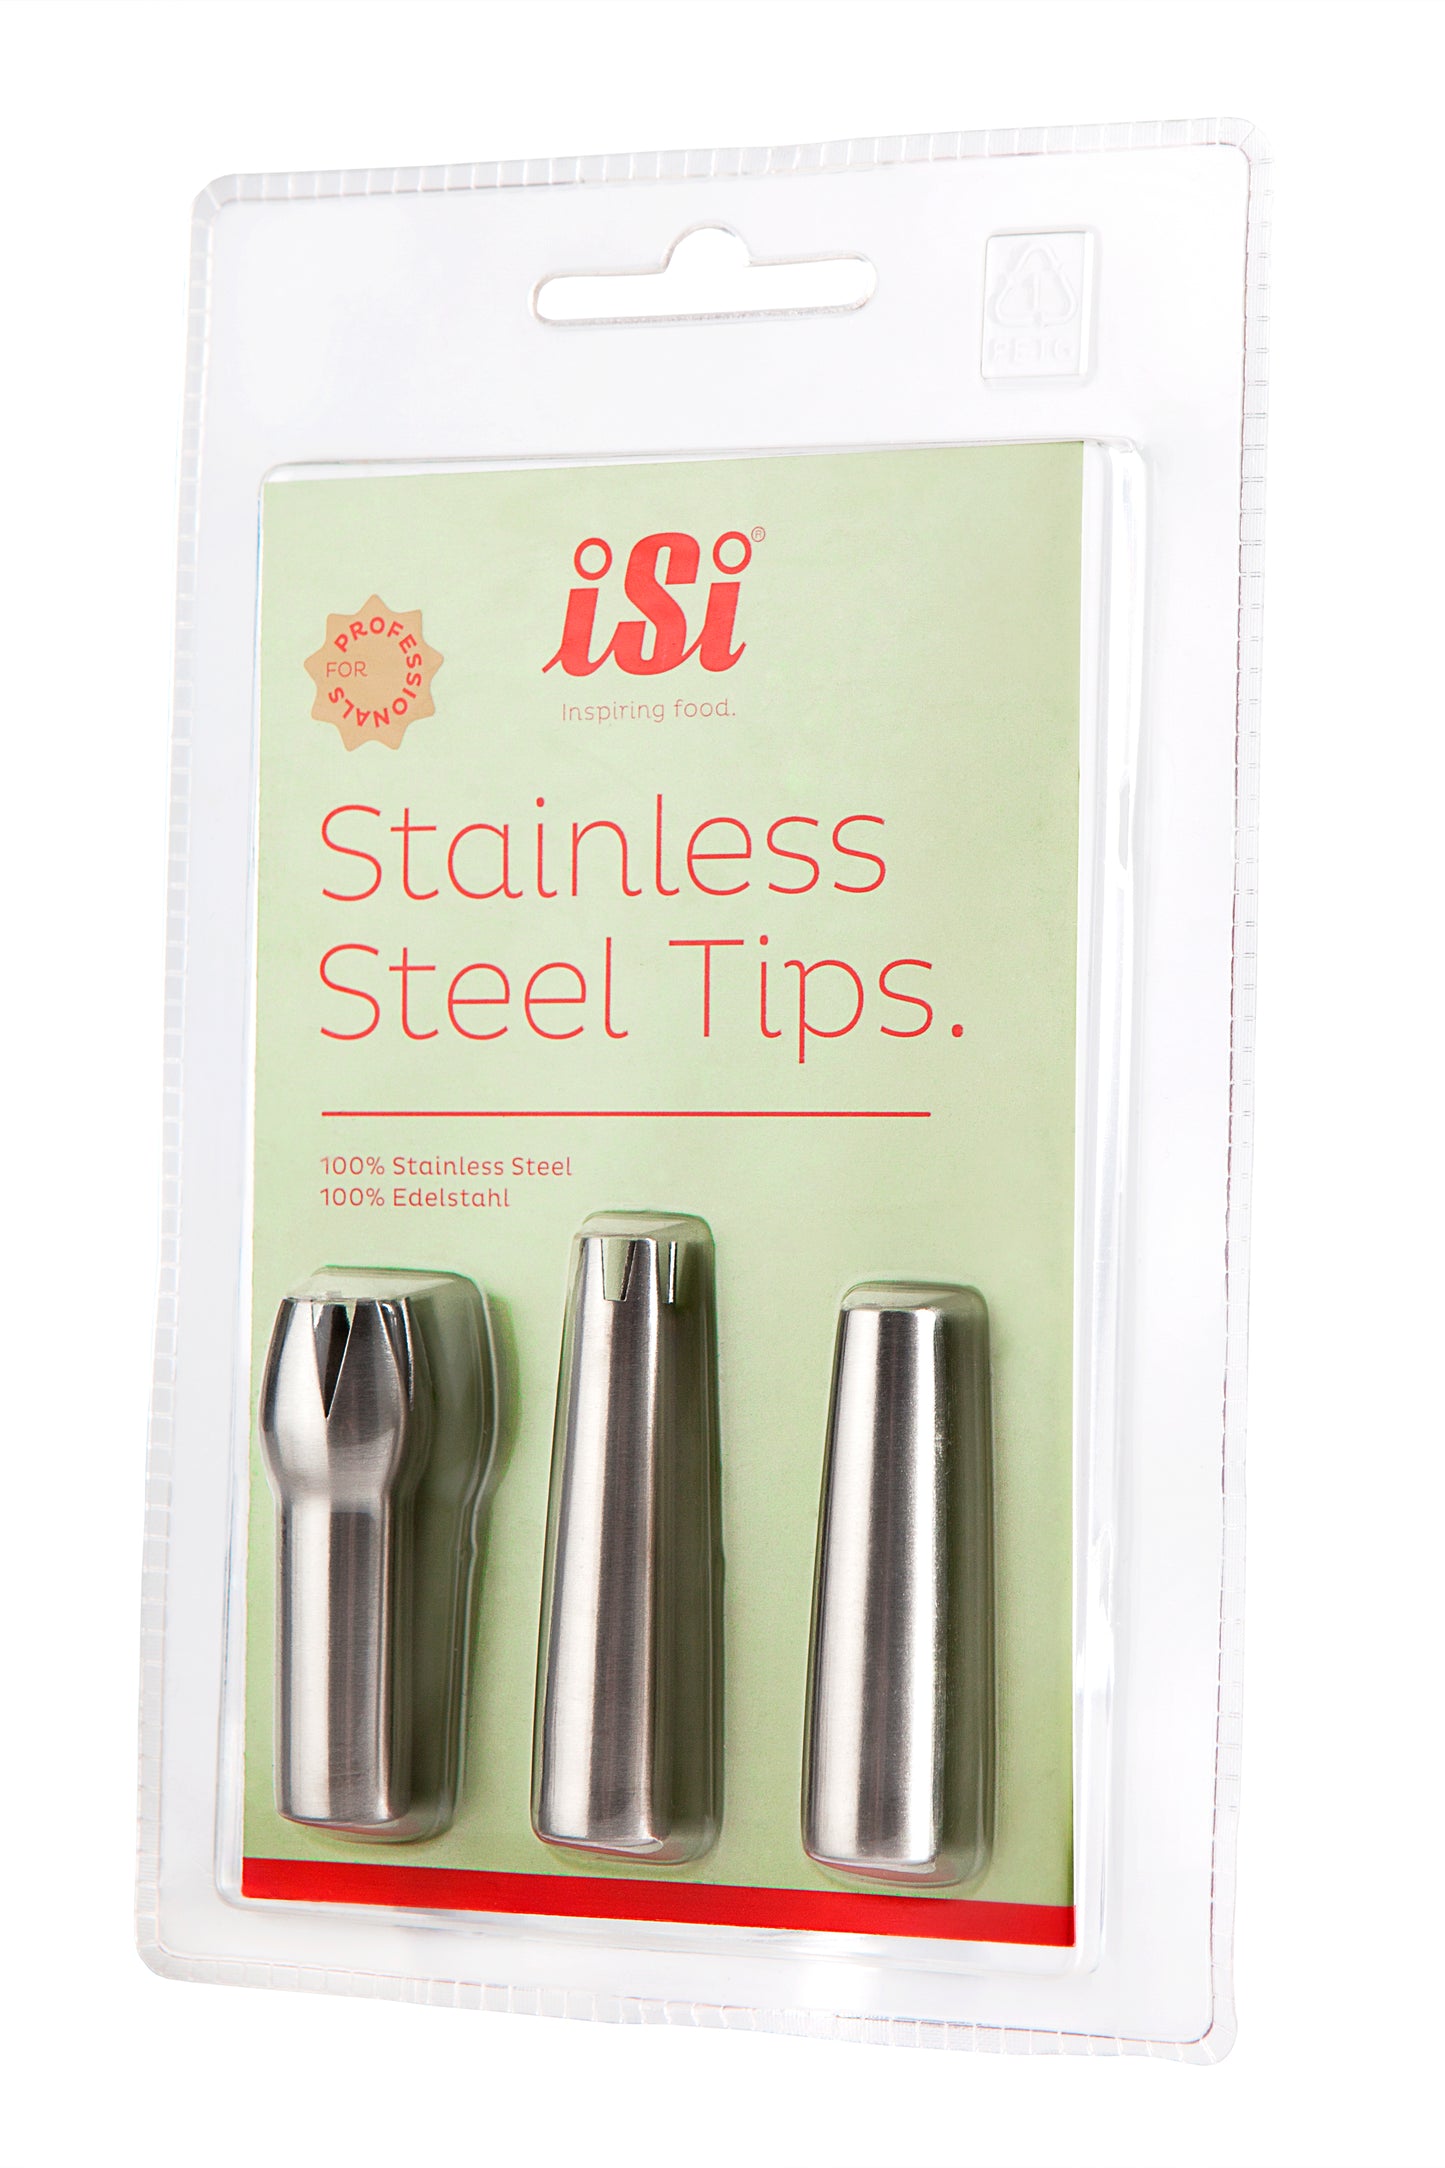 Stainless Steel Tips kit